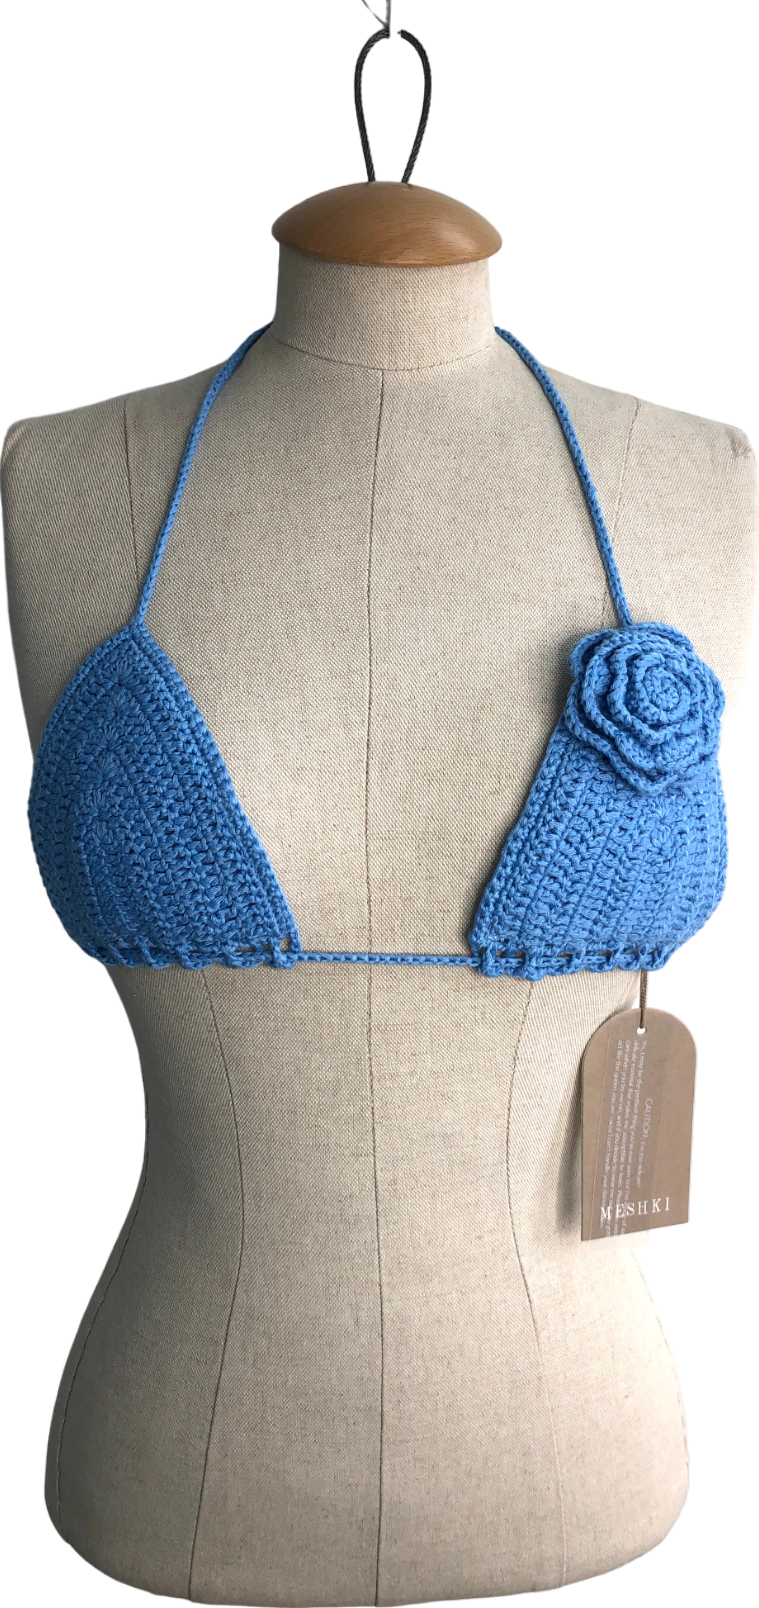 Meshki Blue Verali Rose Crochet Bikini Top UK 8